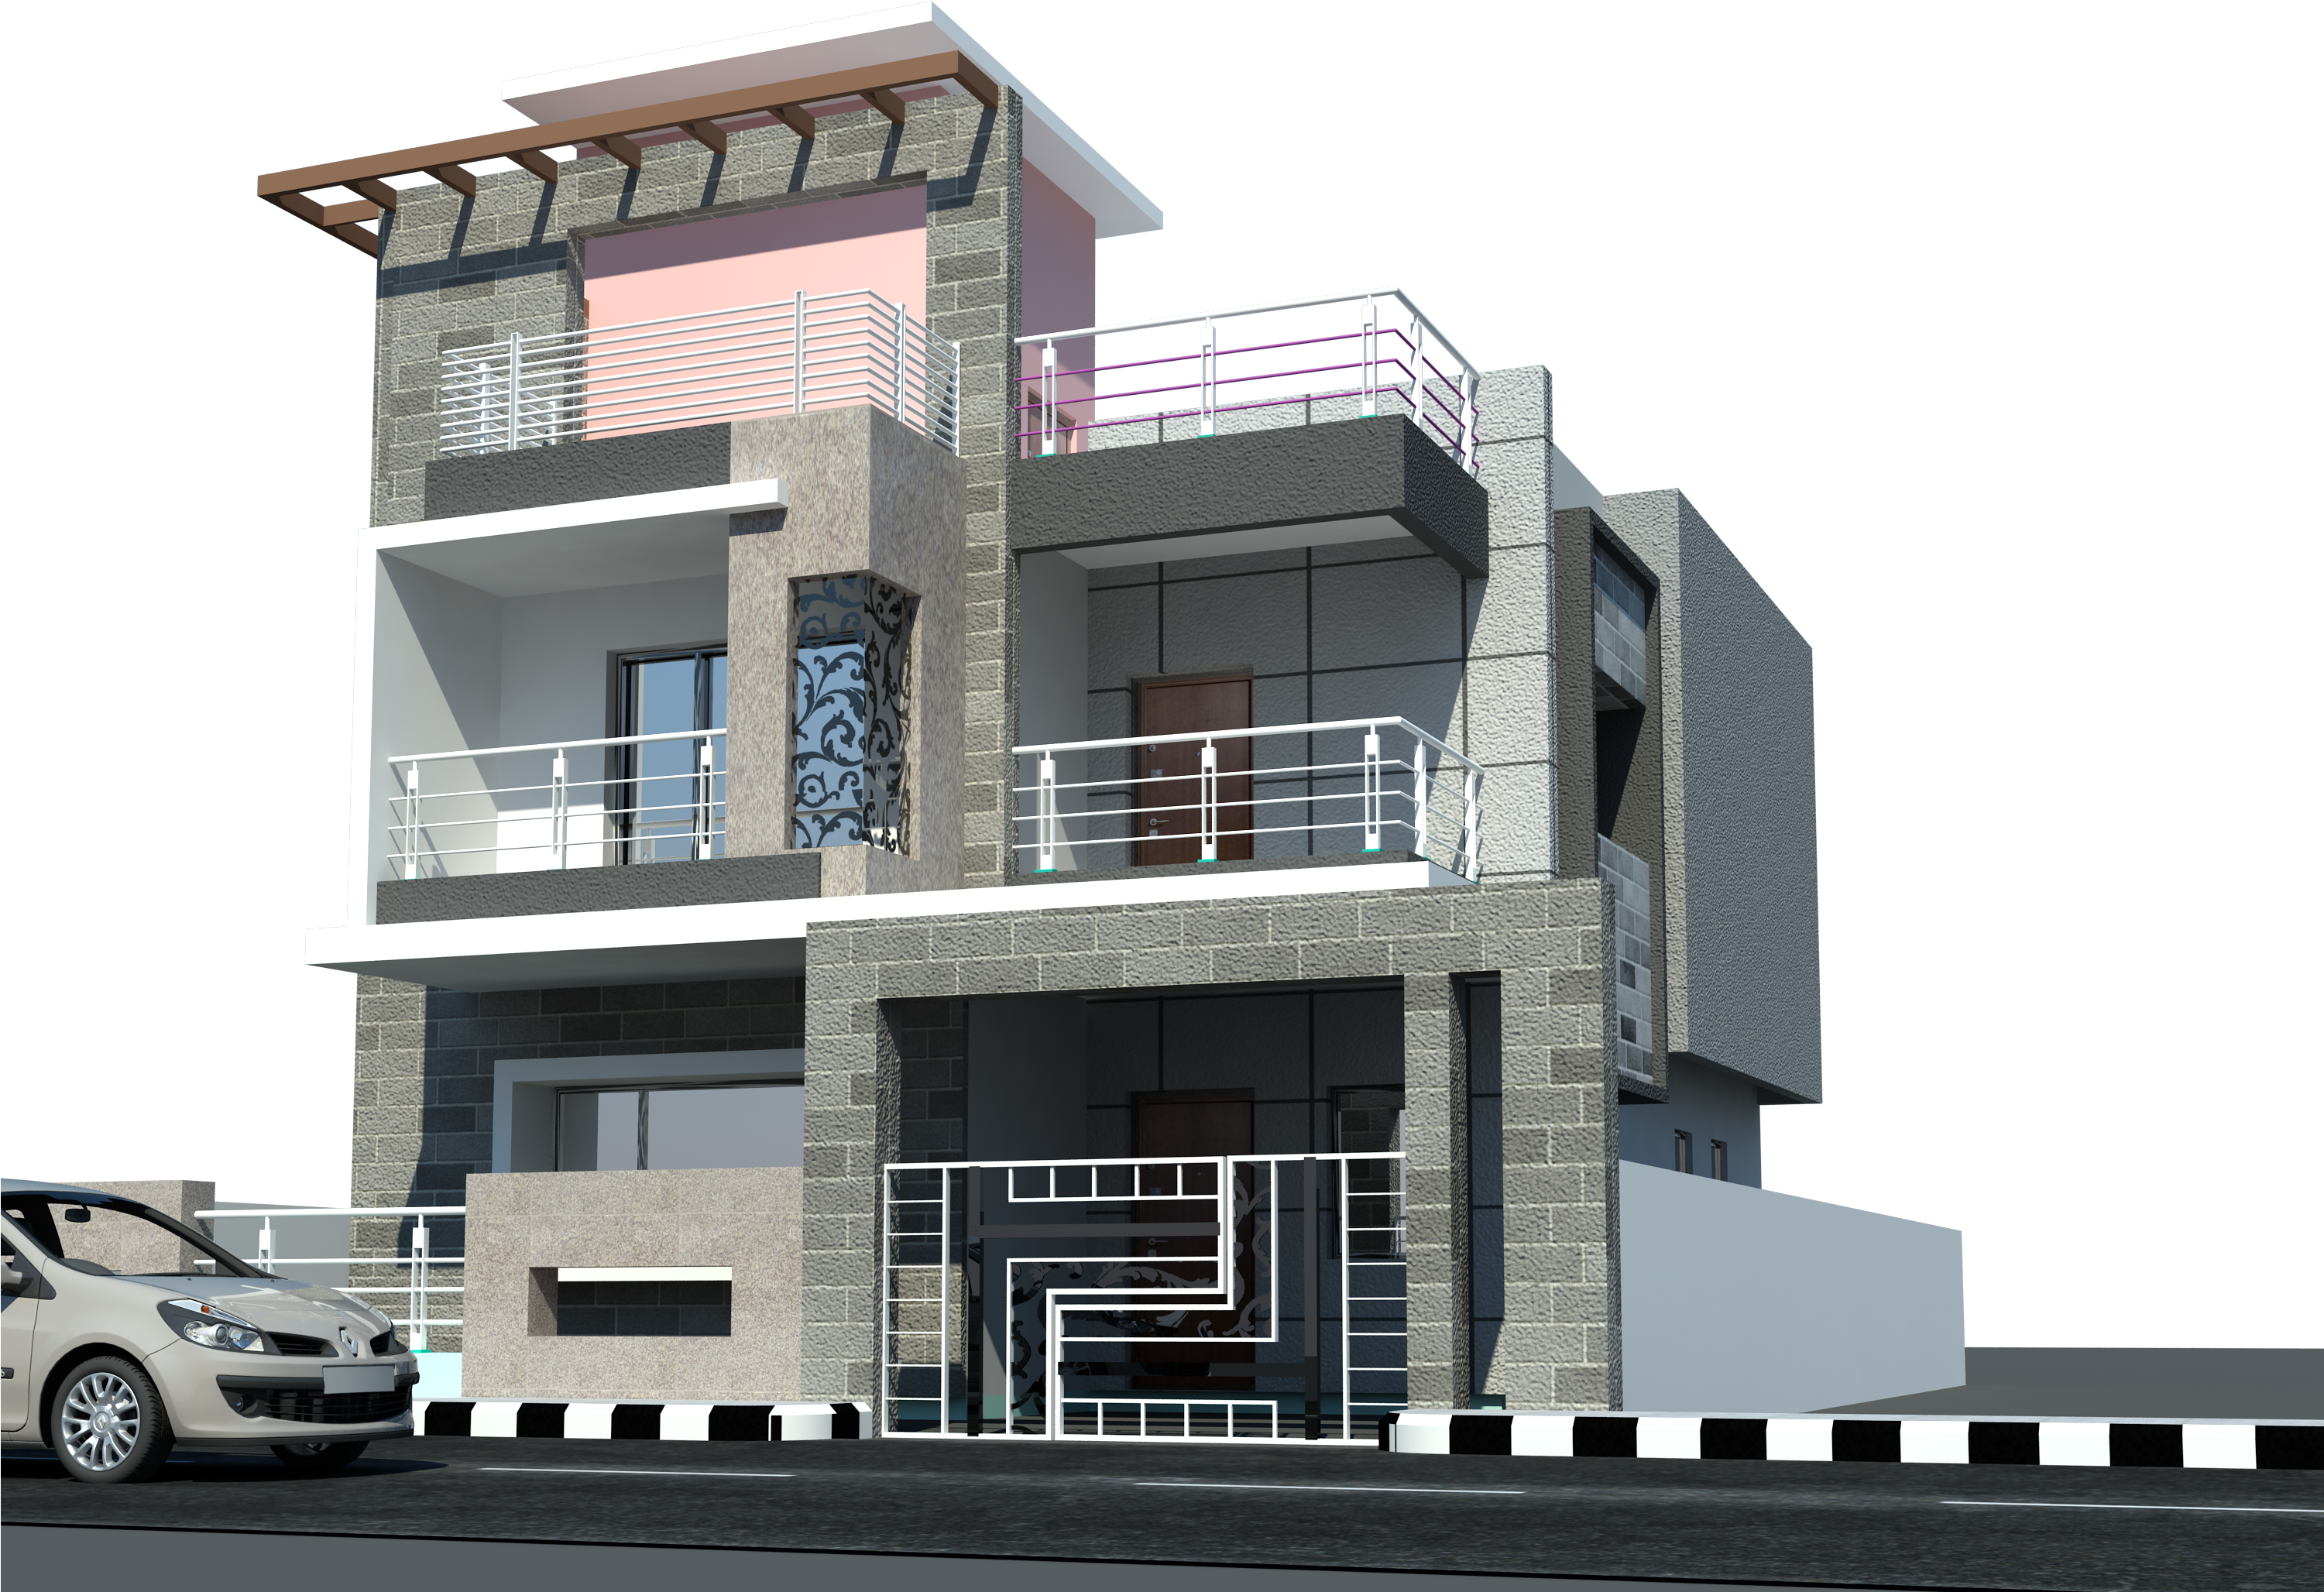 House Elevation, House Pics, Modern Houses, Elevator, - House (3000x2250)